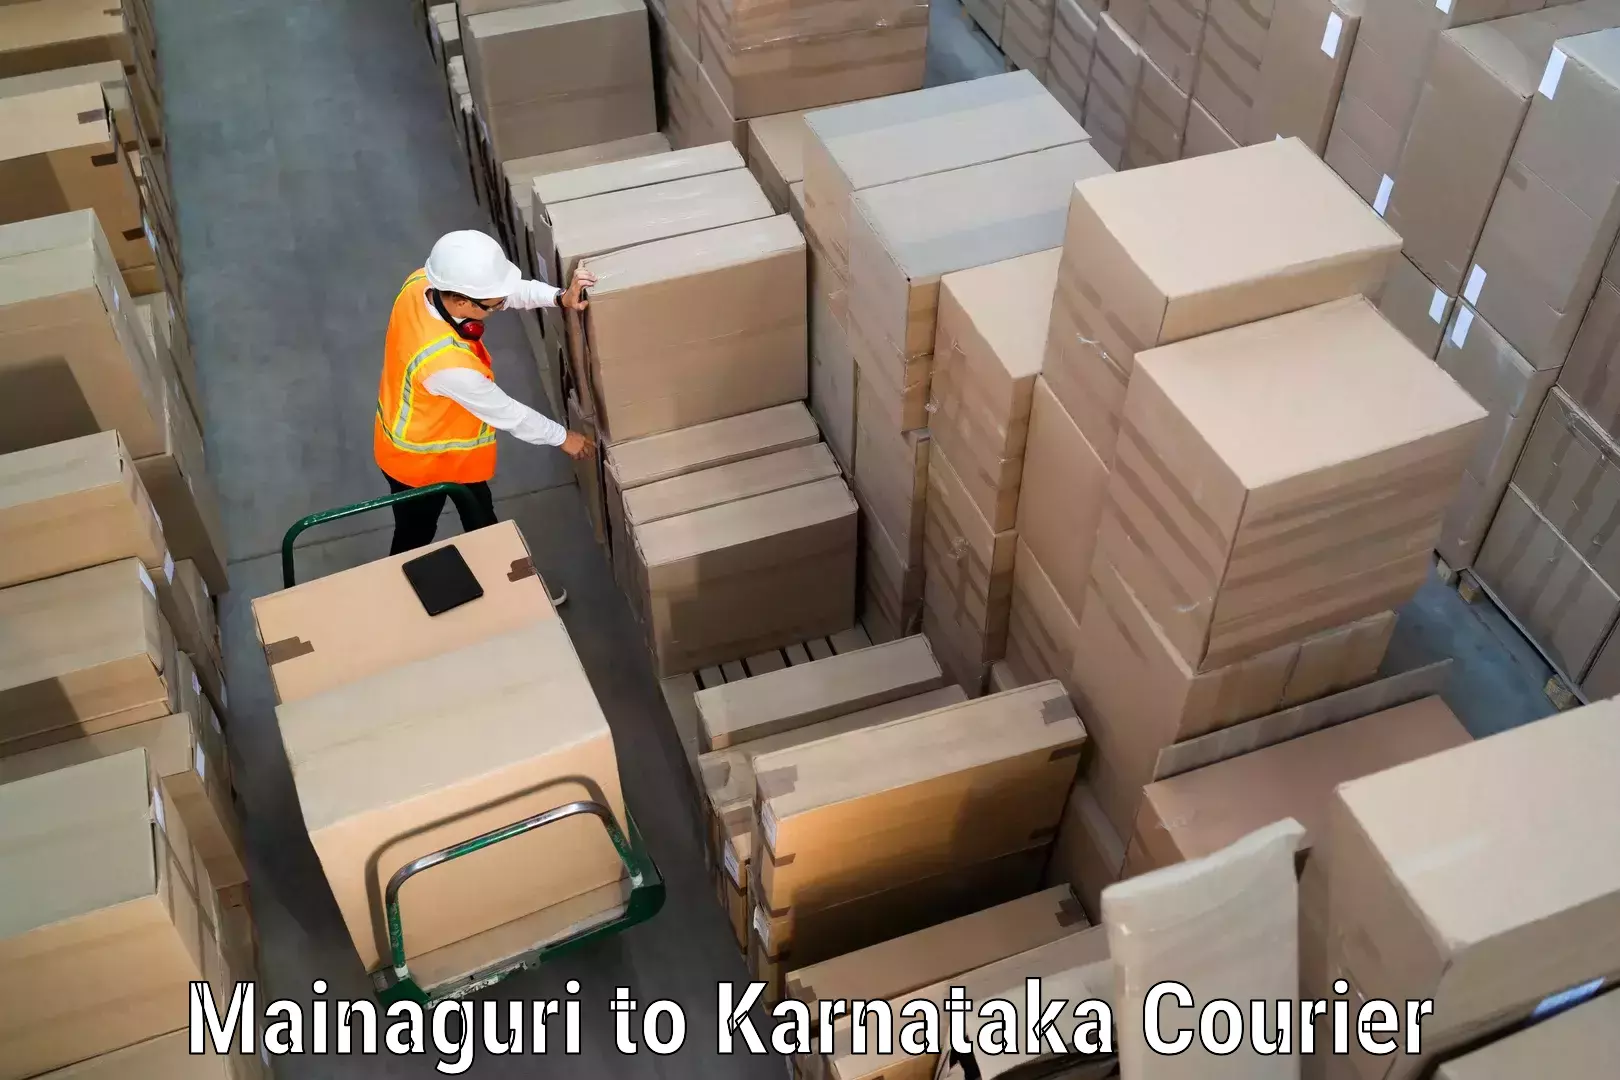 On-call courier service Mainaguri to Karnataka